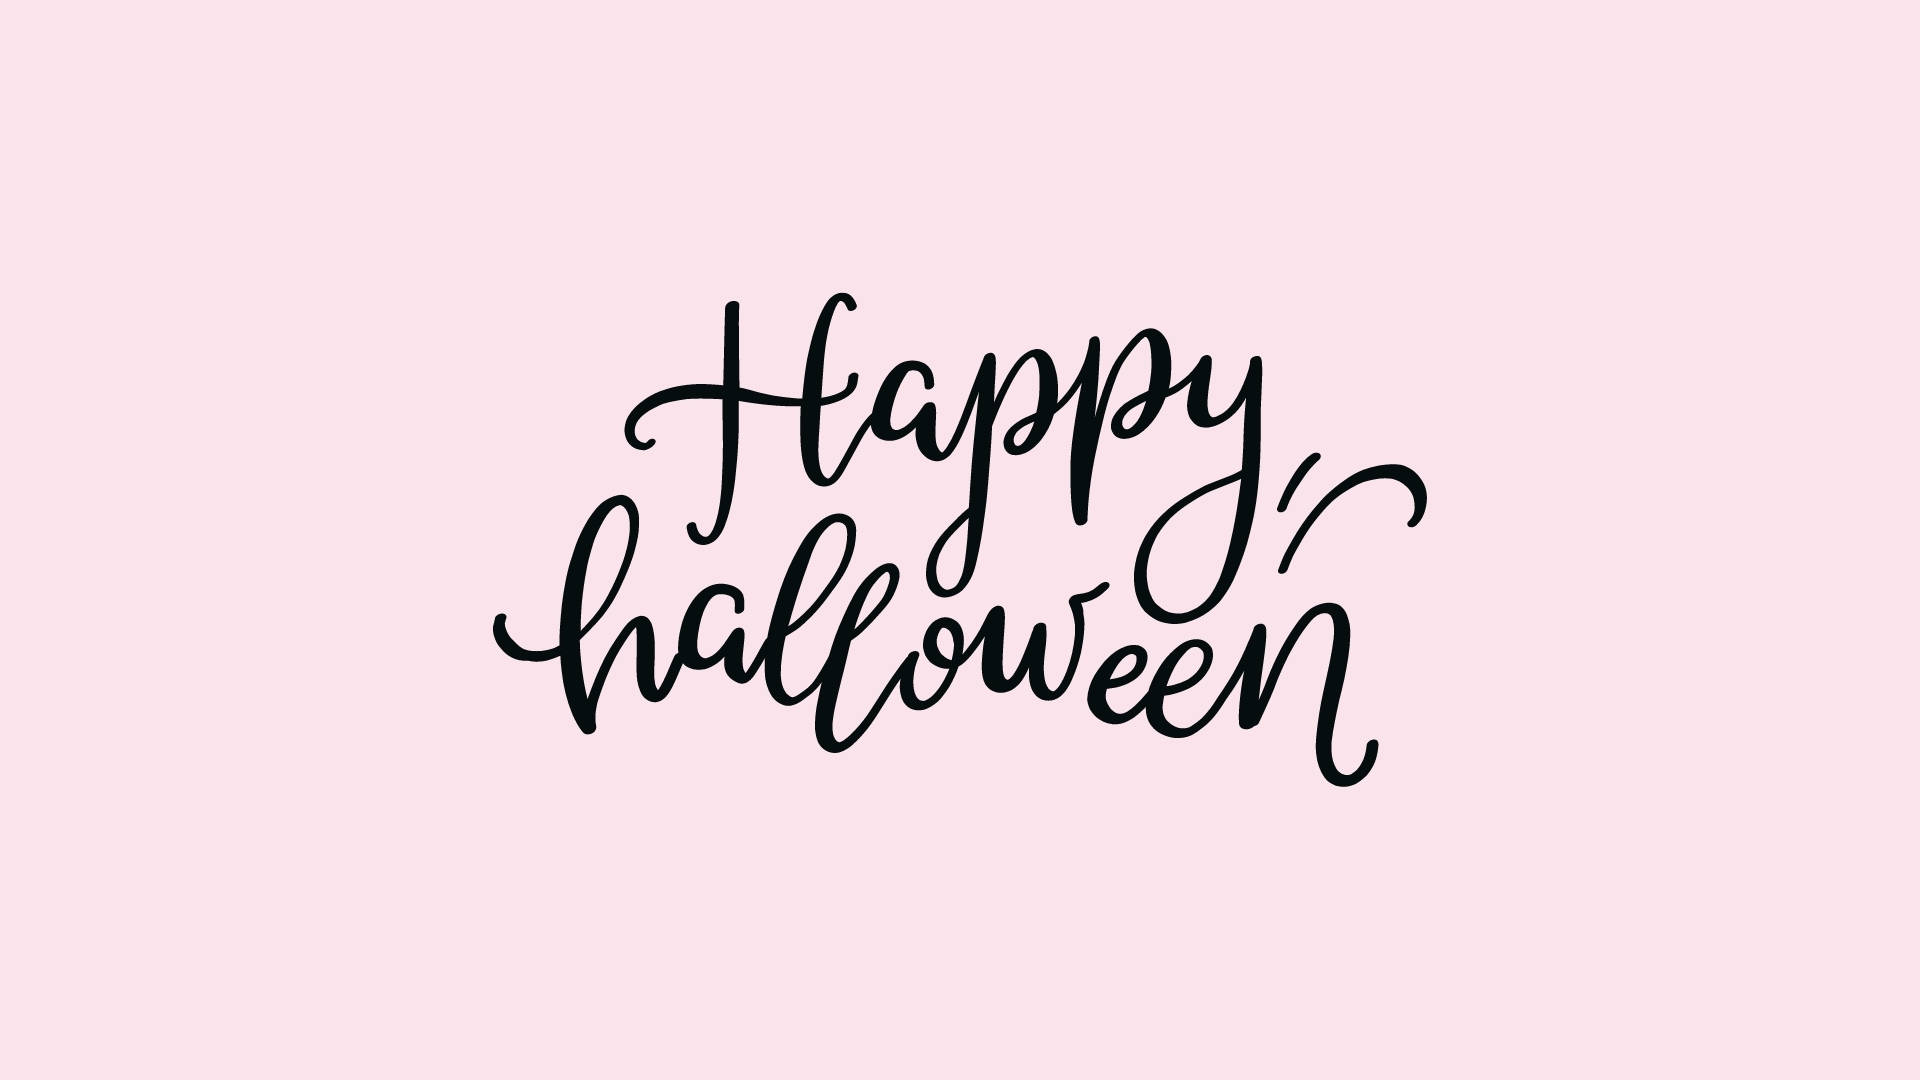 Wishing You A Happy Halloween!